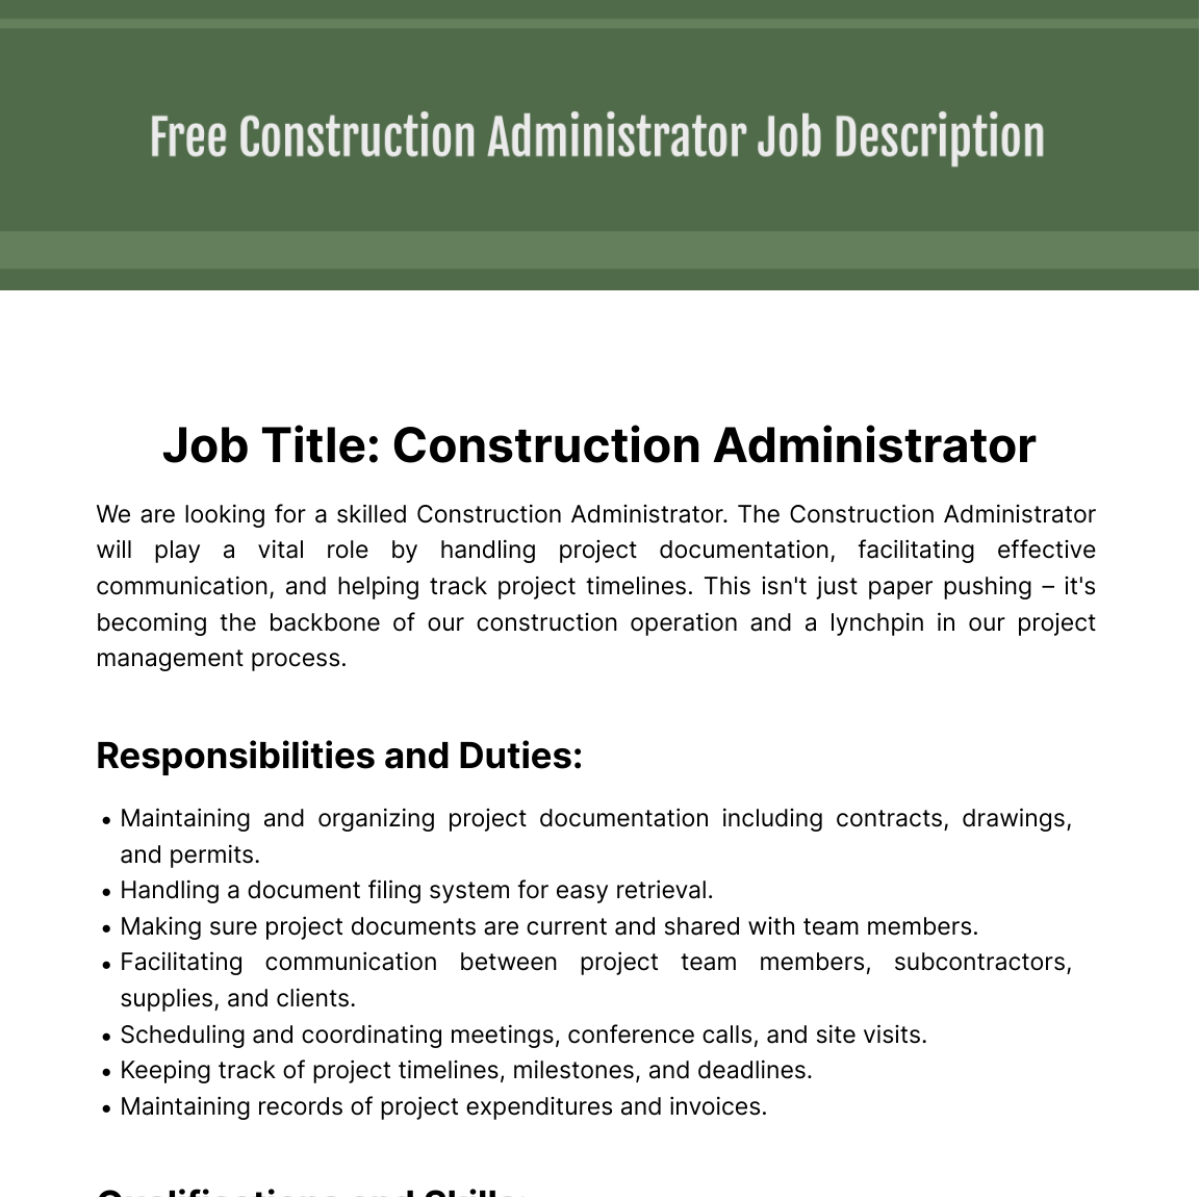 Free Construction Administrator Job Description Template